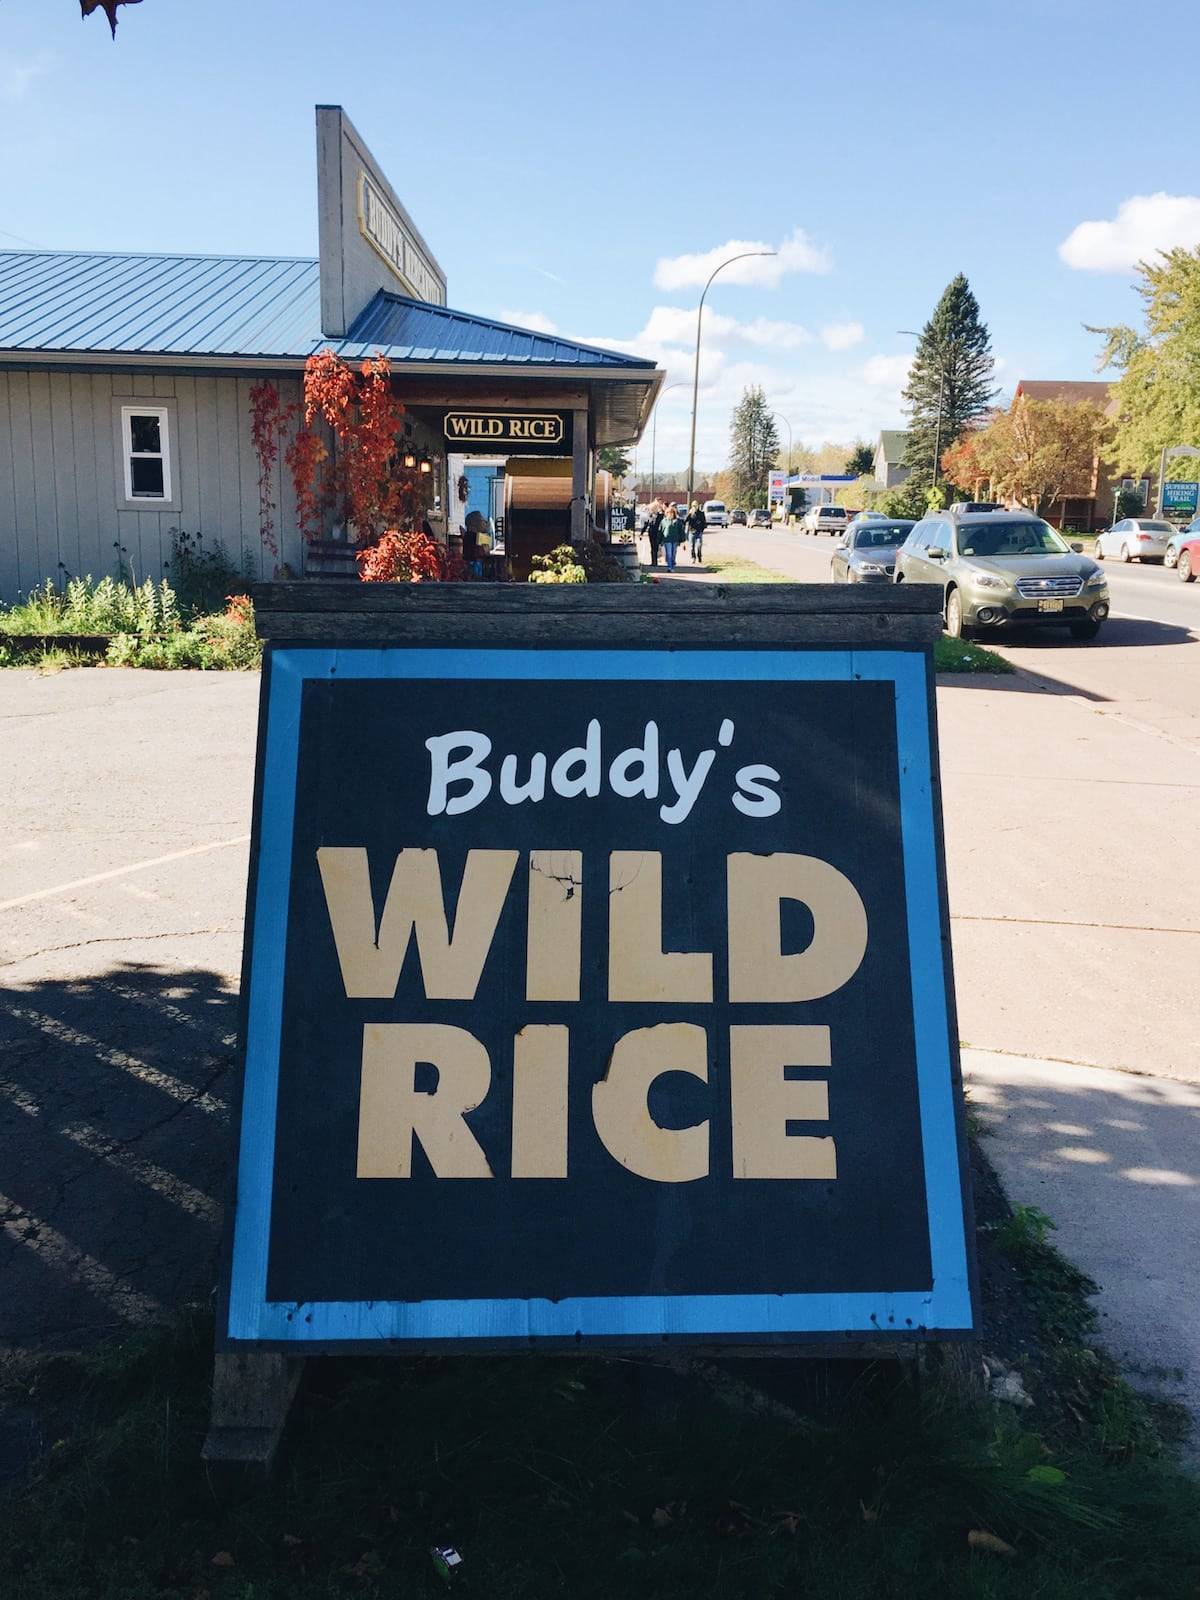 Sign reading "Buddy's Wild Rice".